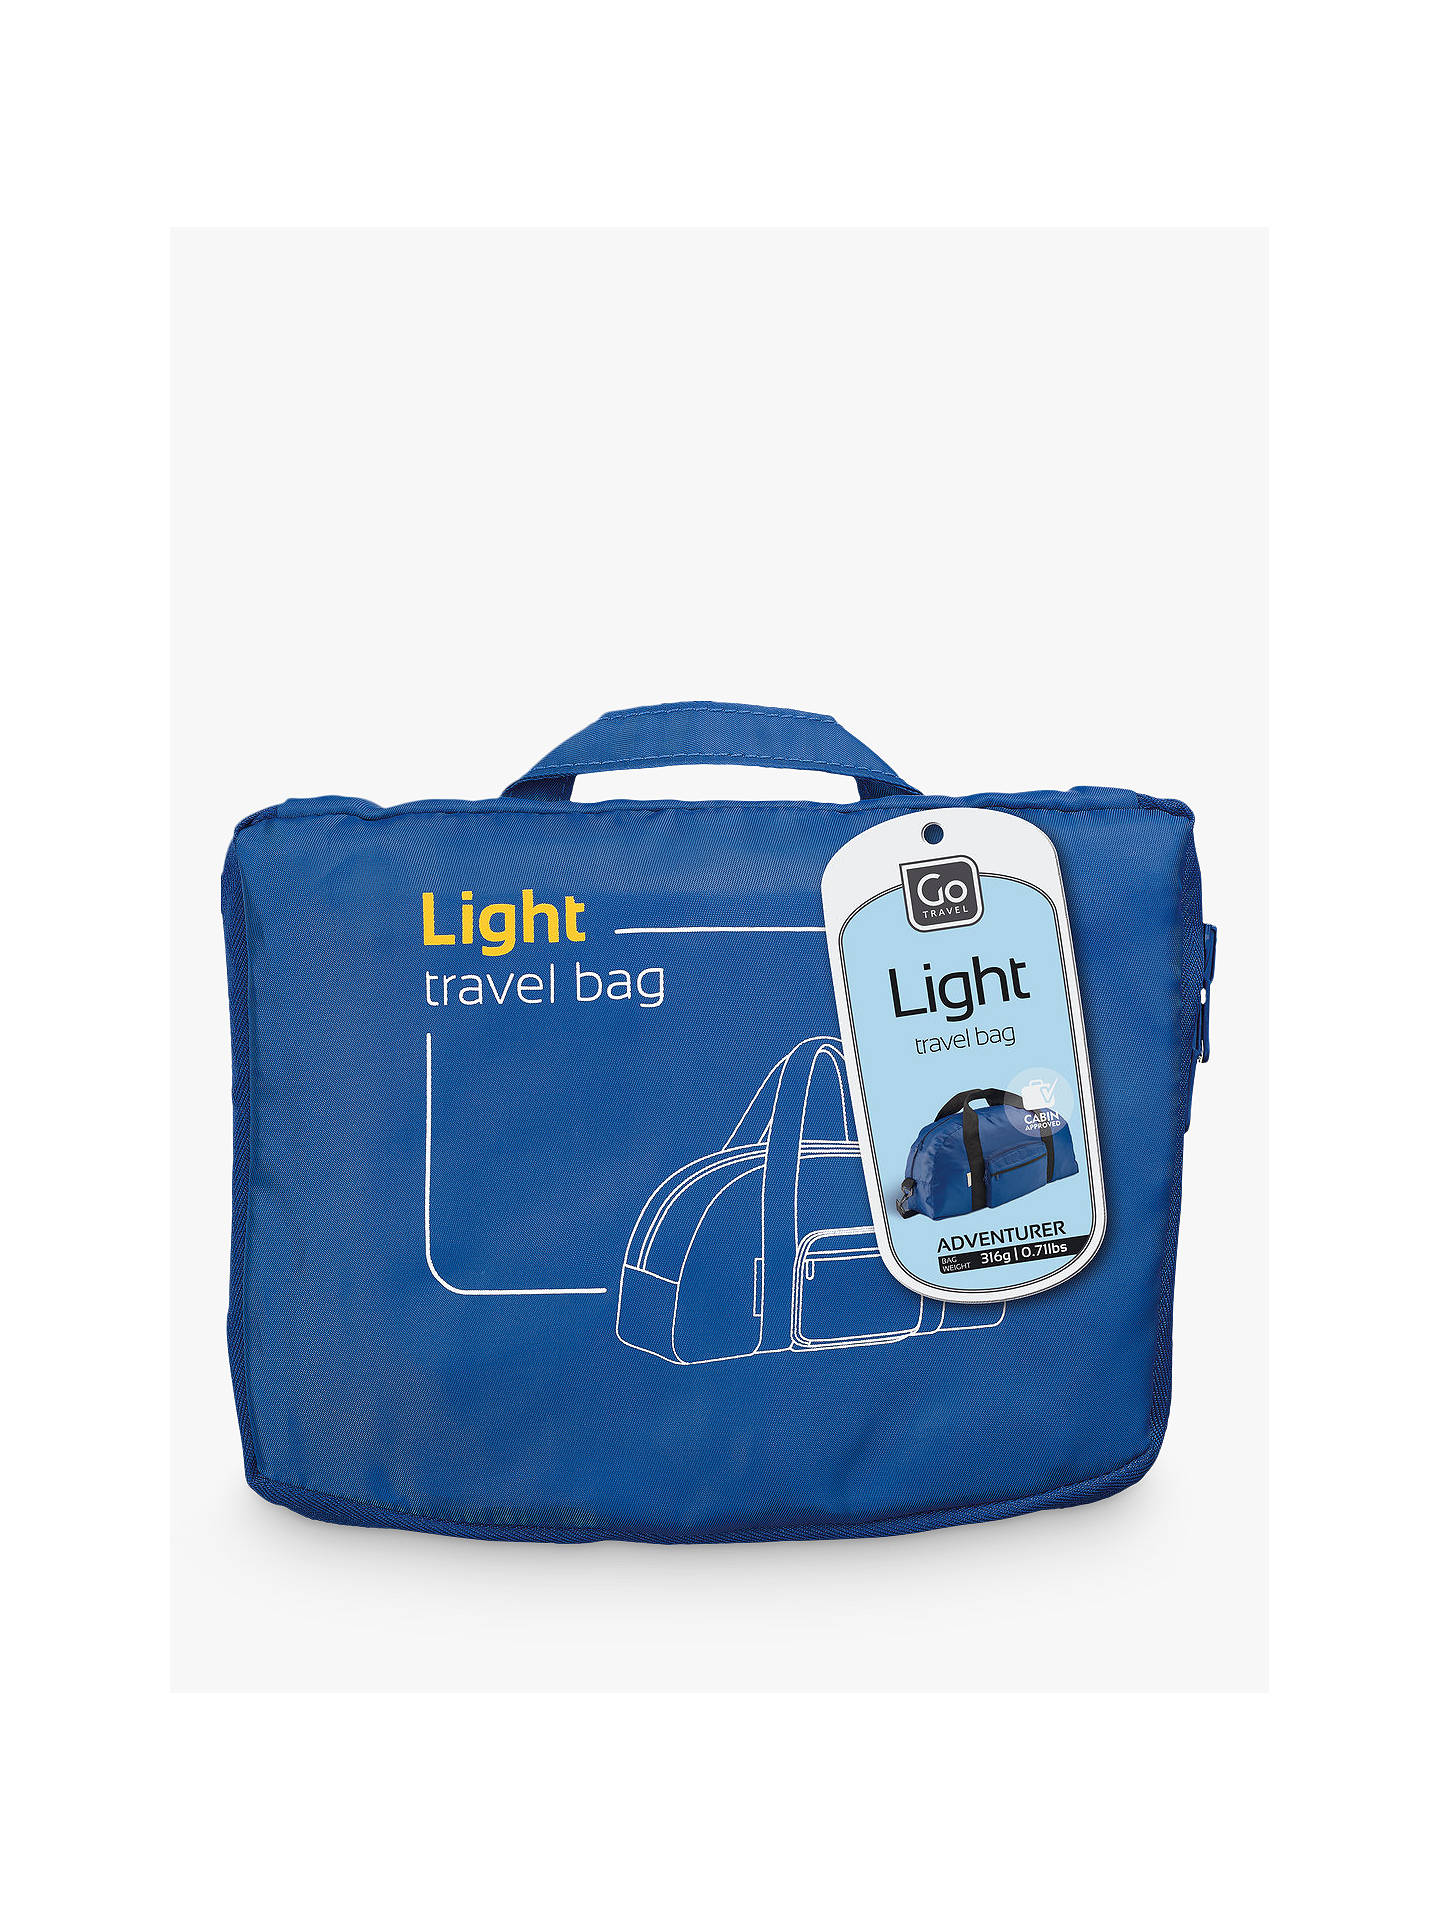 Go Travel Light Foldaway Travel Bag, Blue at John Lewis & Partners